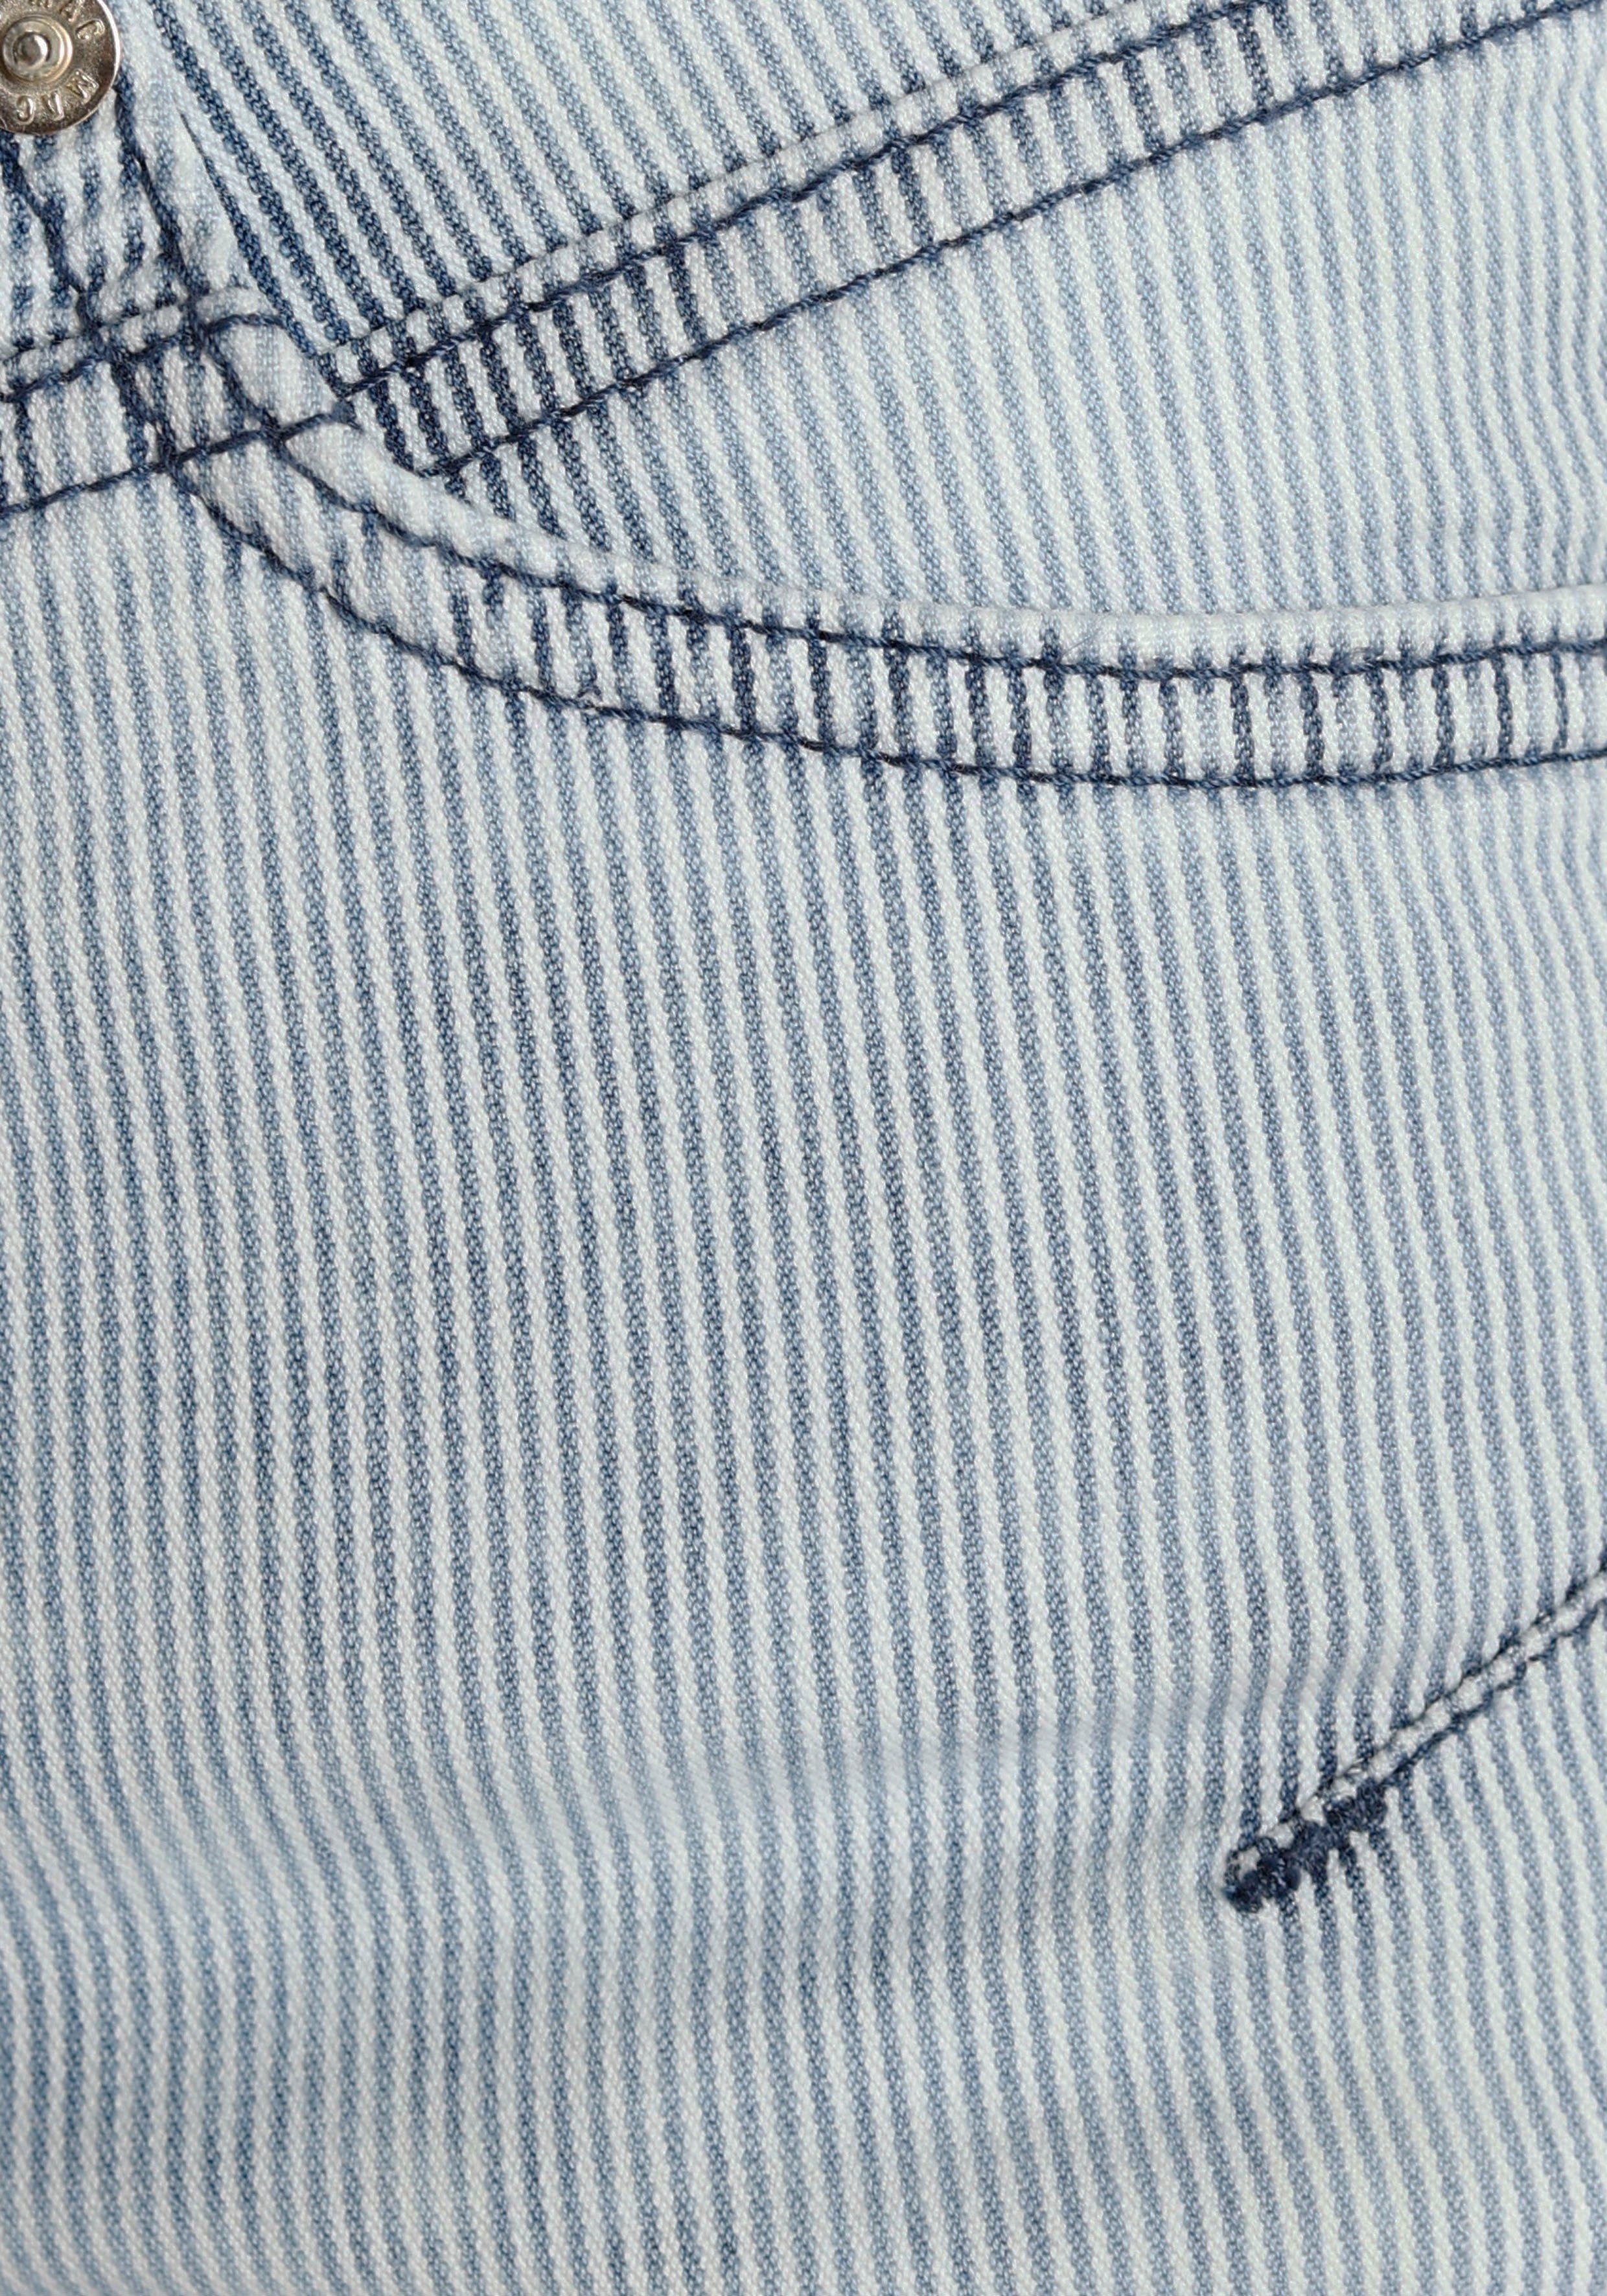 MAC 7/8-Jeans Jeans »Rich-Slim-chic stripe«